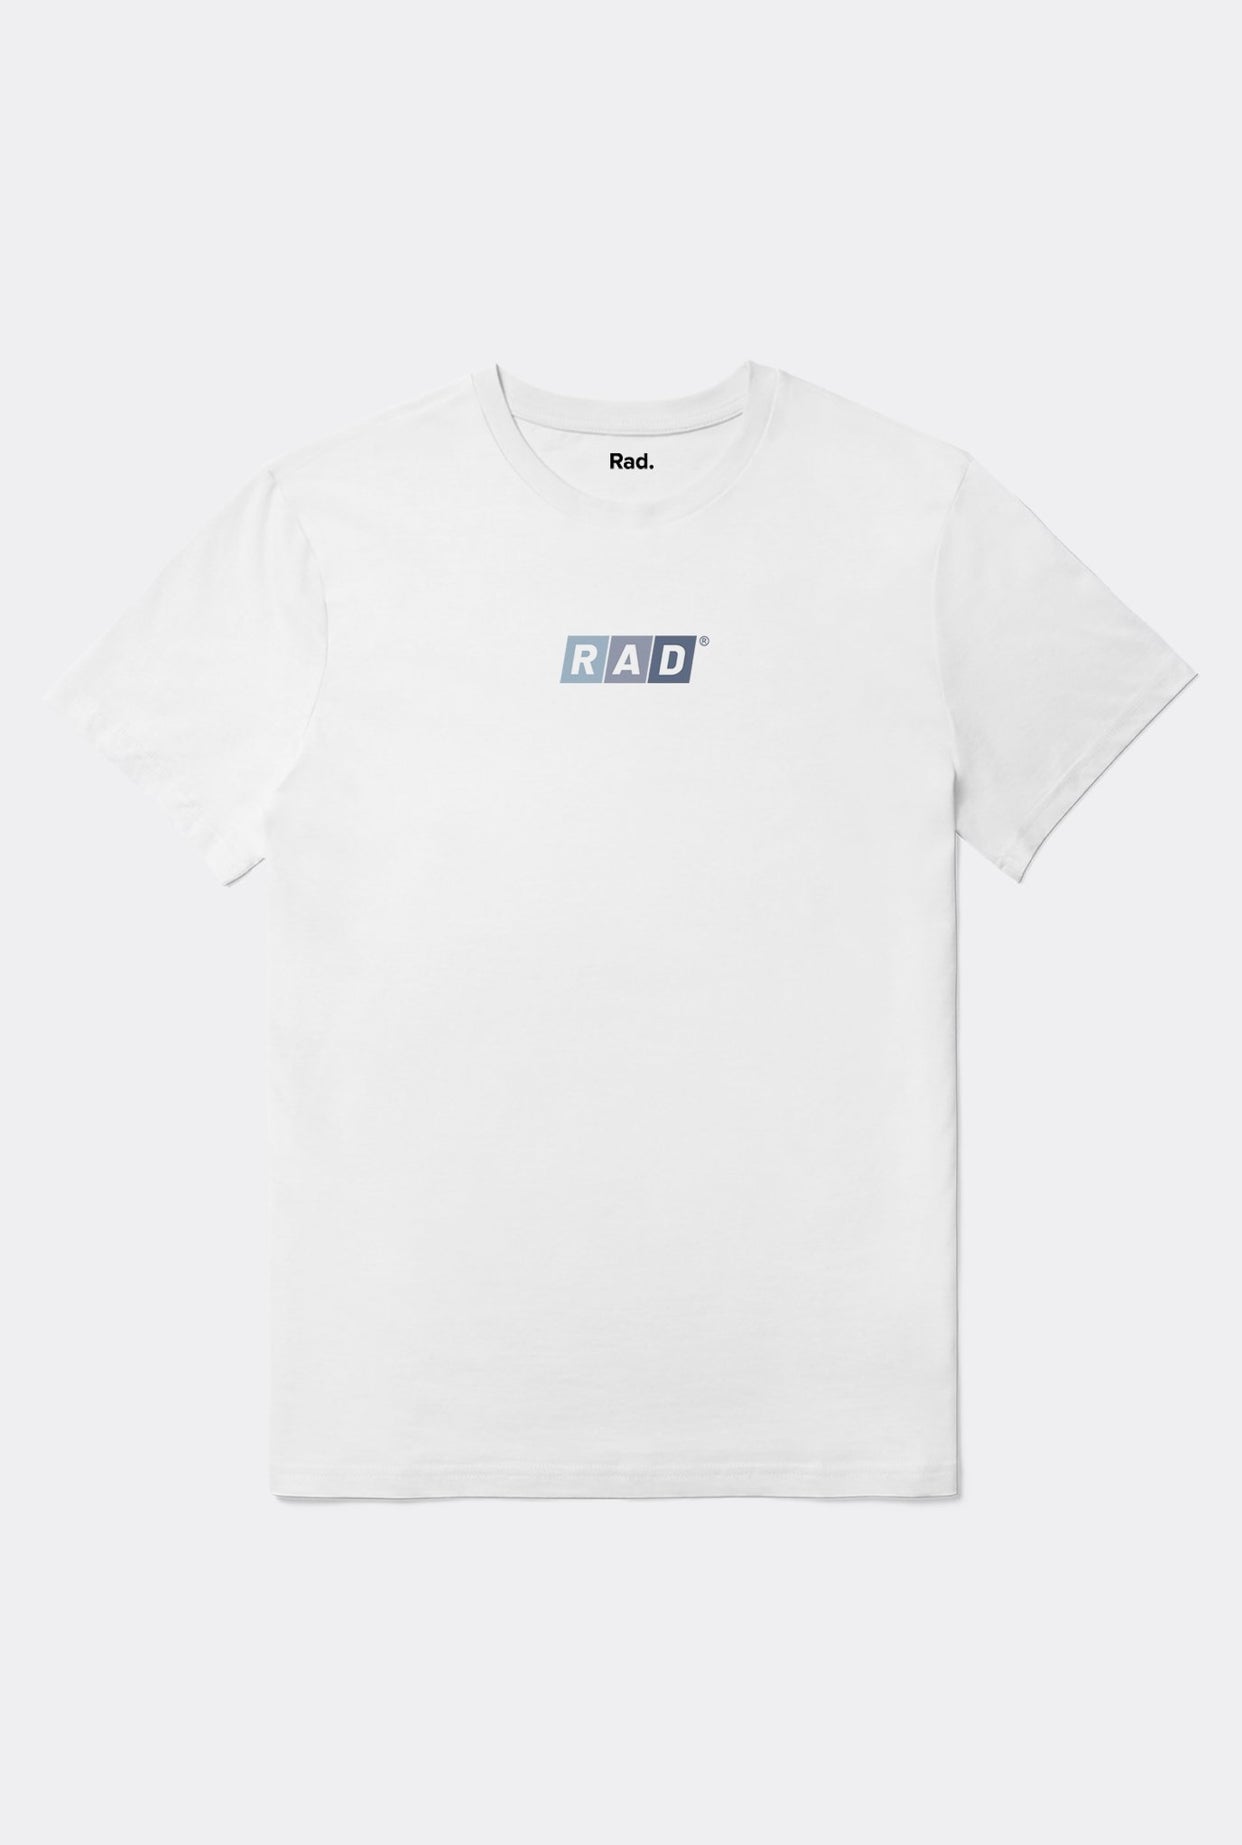 T-Shirt S/S Rad Square Grey